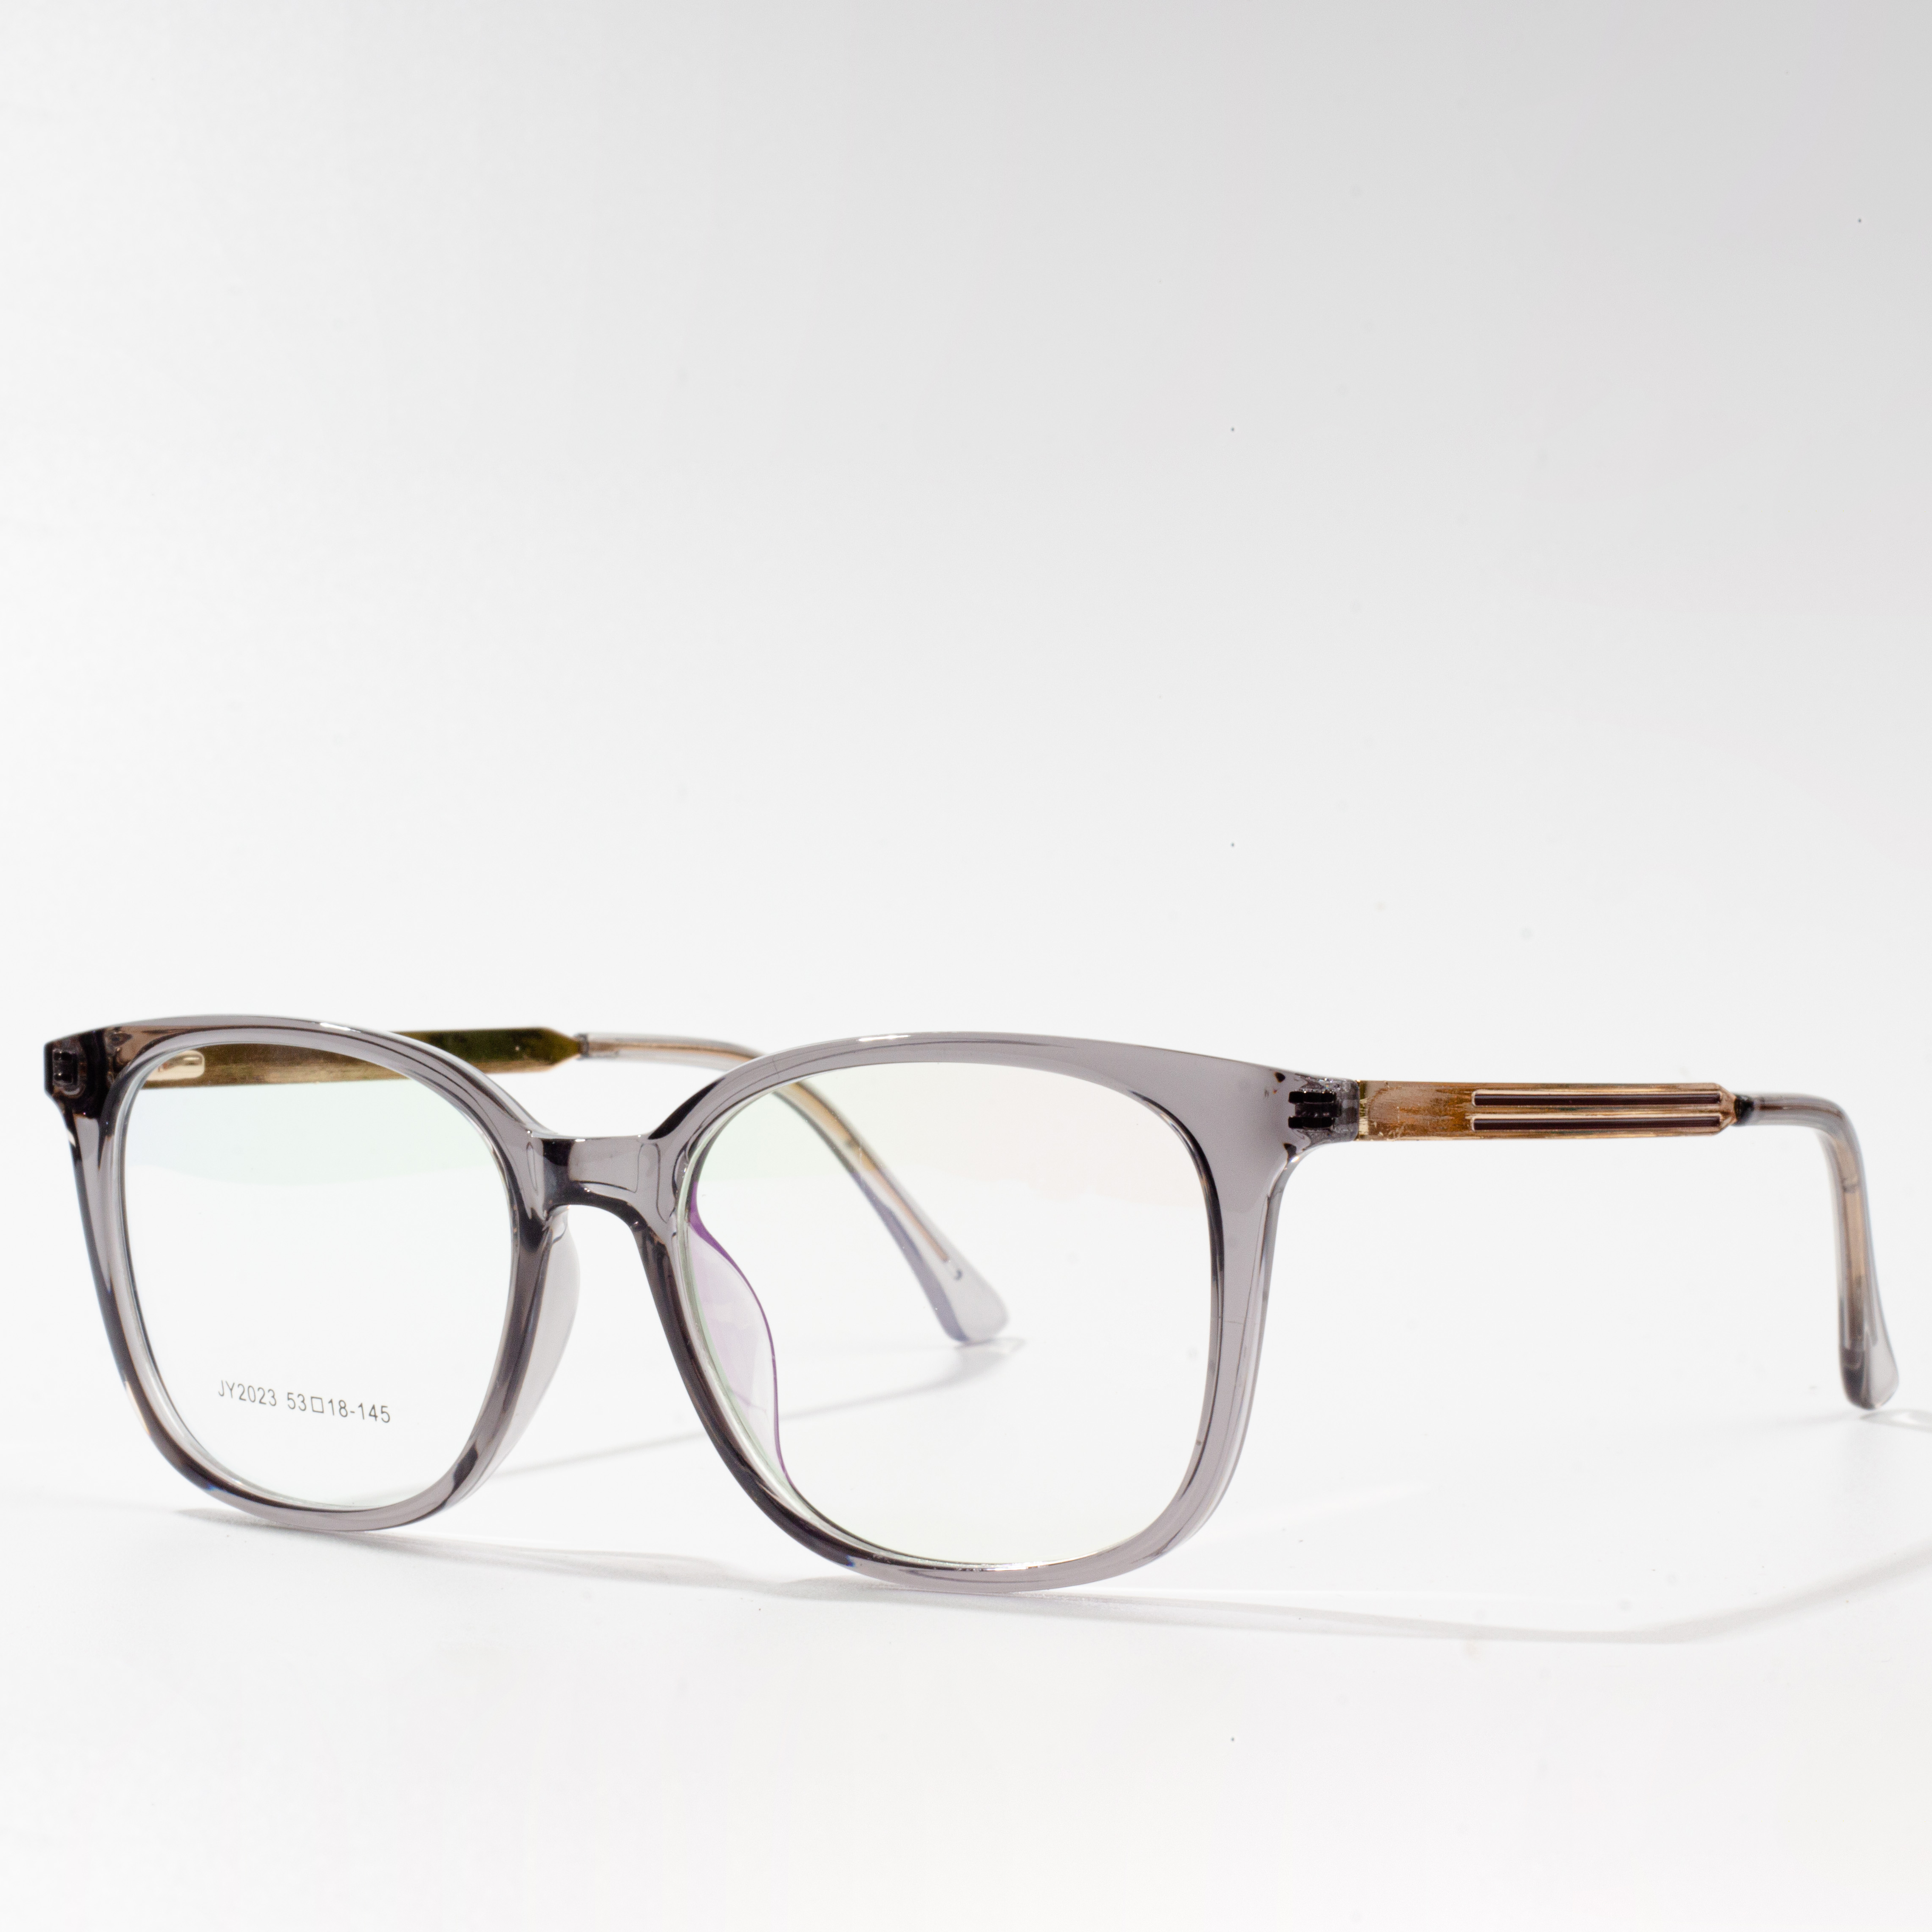 plastic eyeglass frames